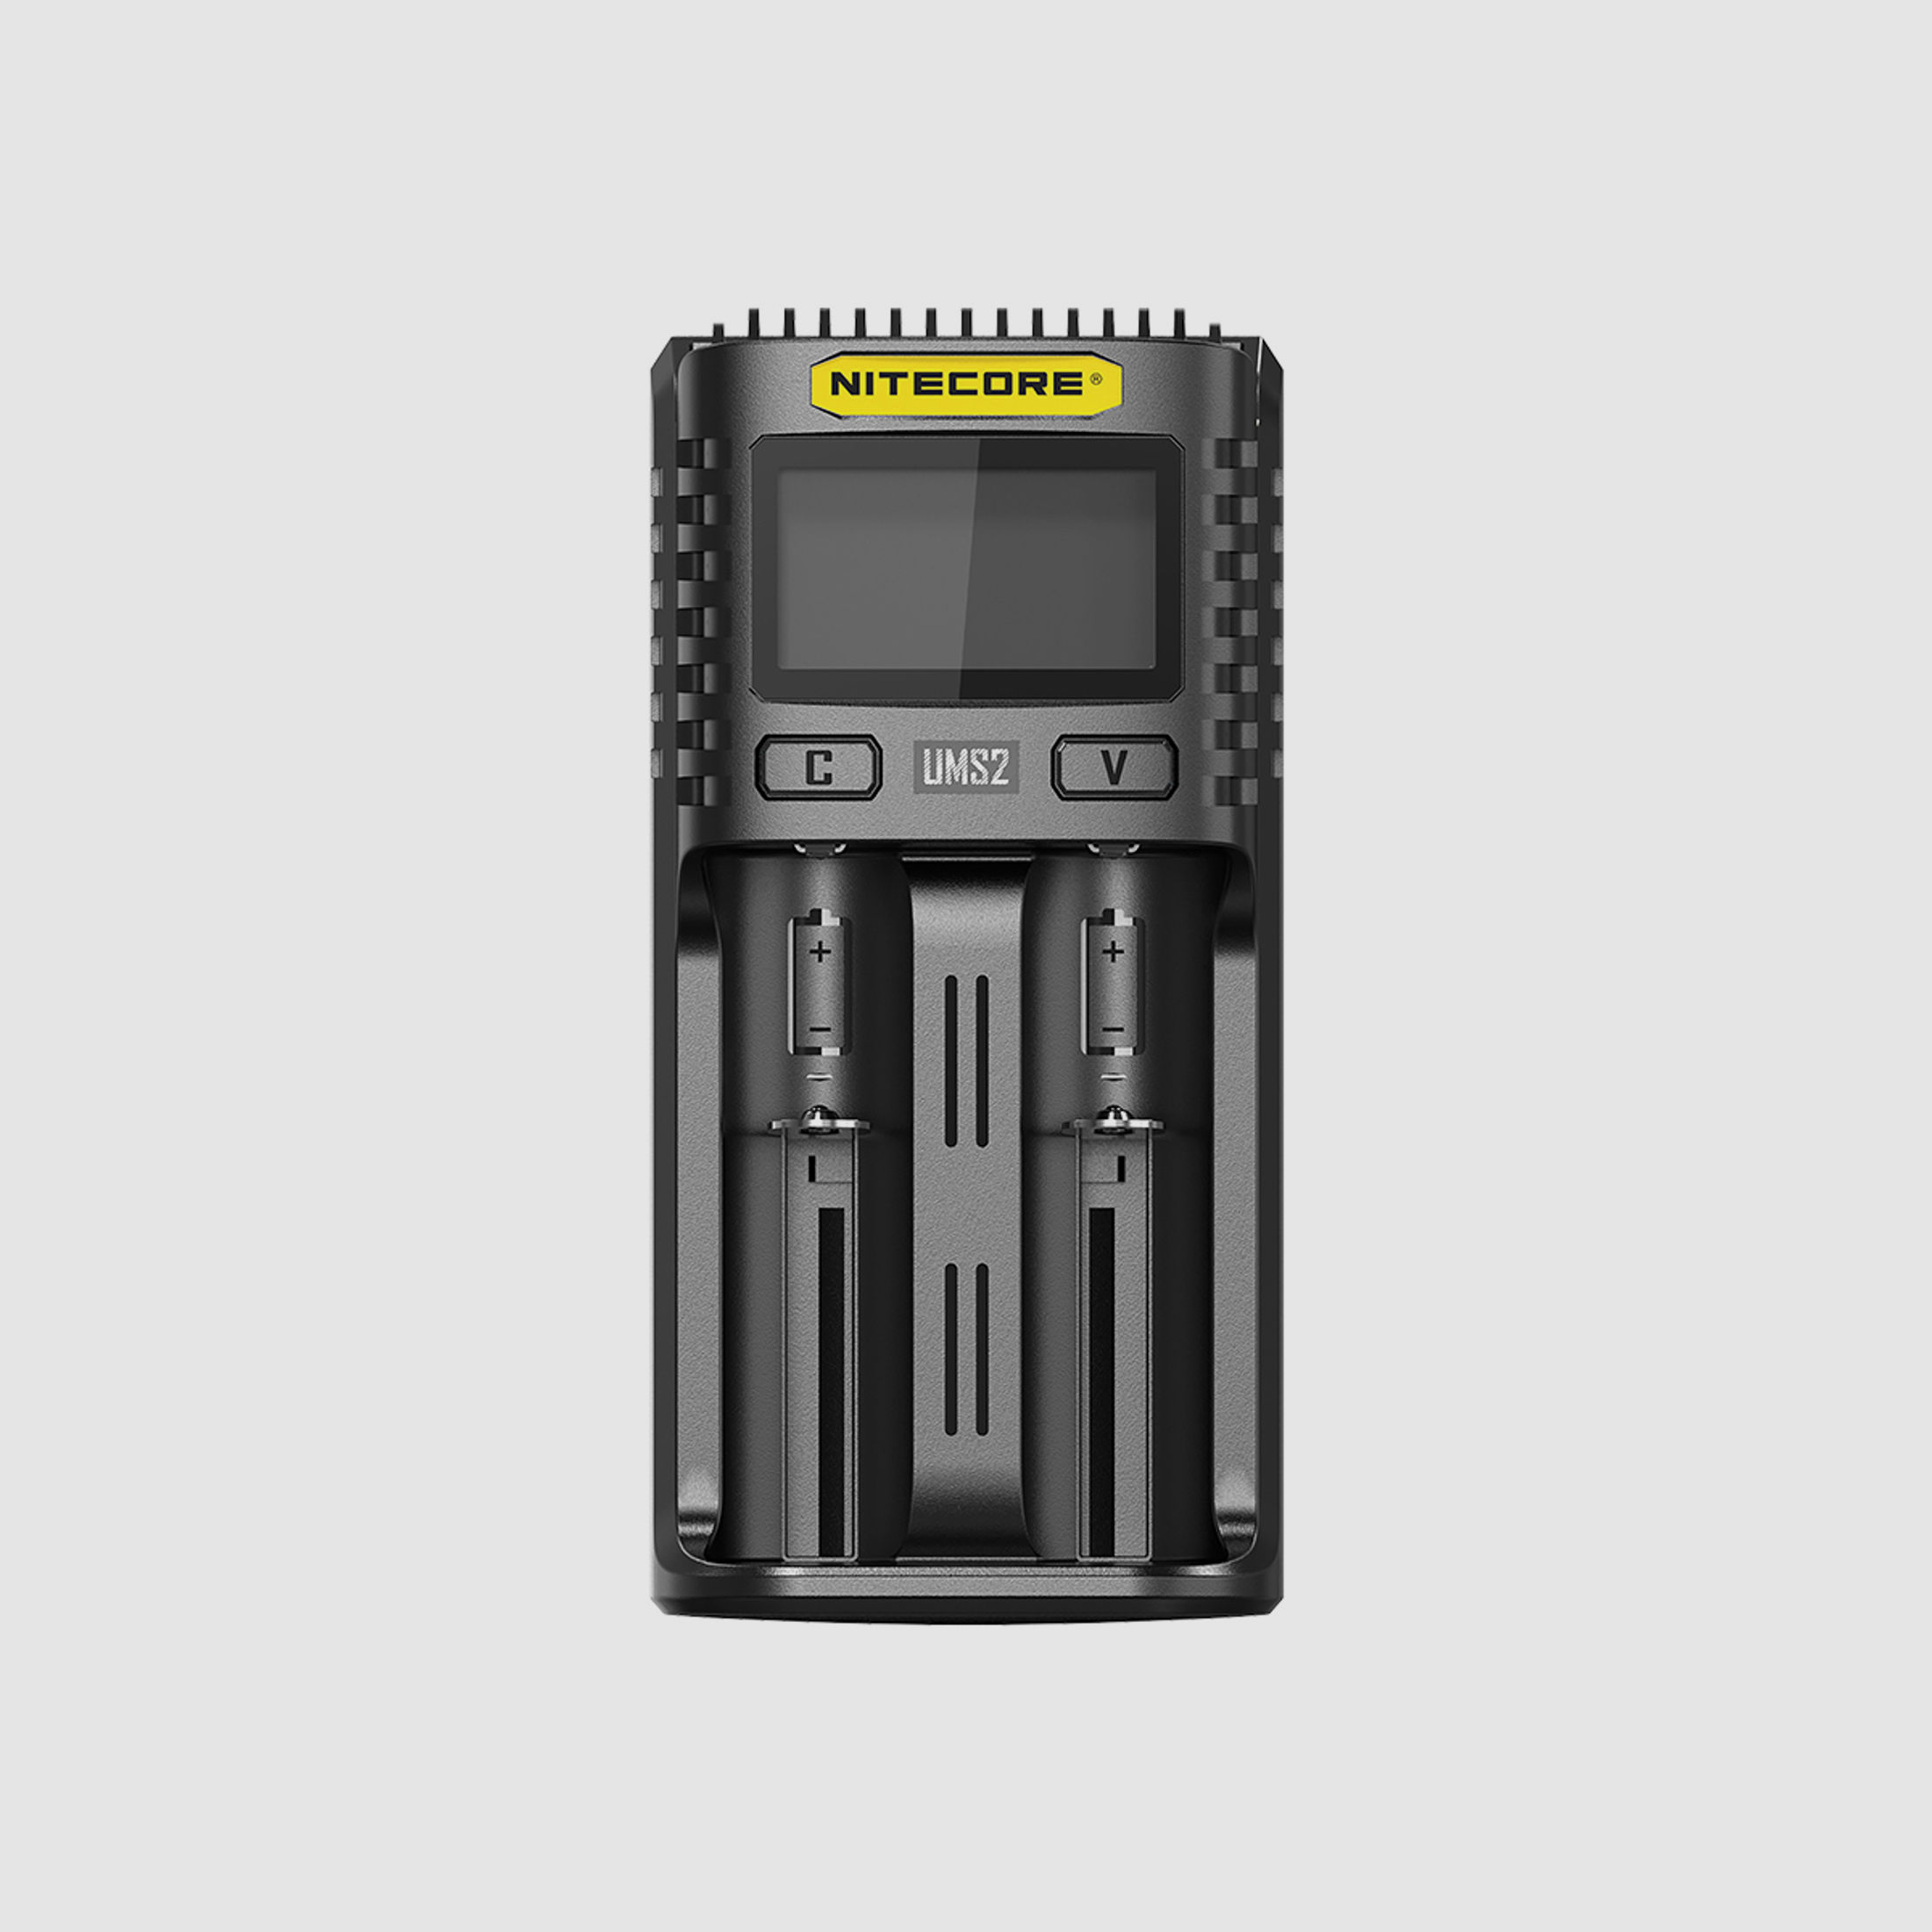 Nitecore UMS2 USB Schnell Ladegerät